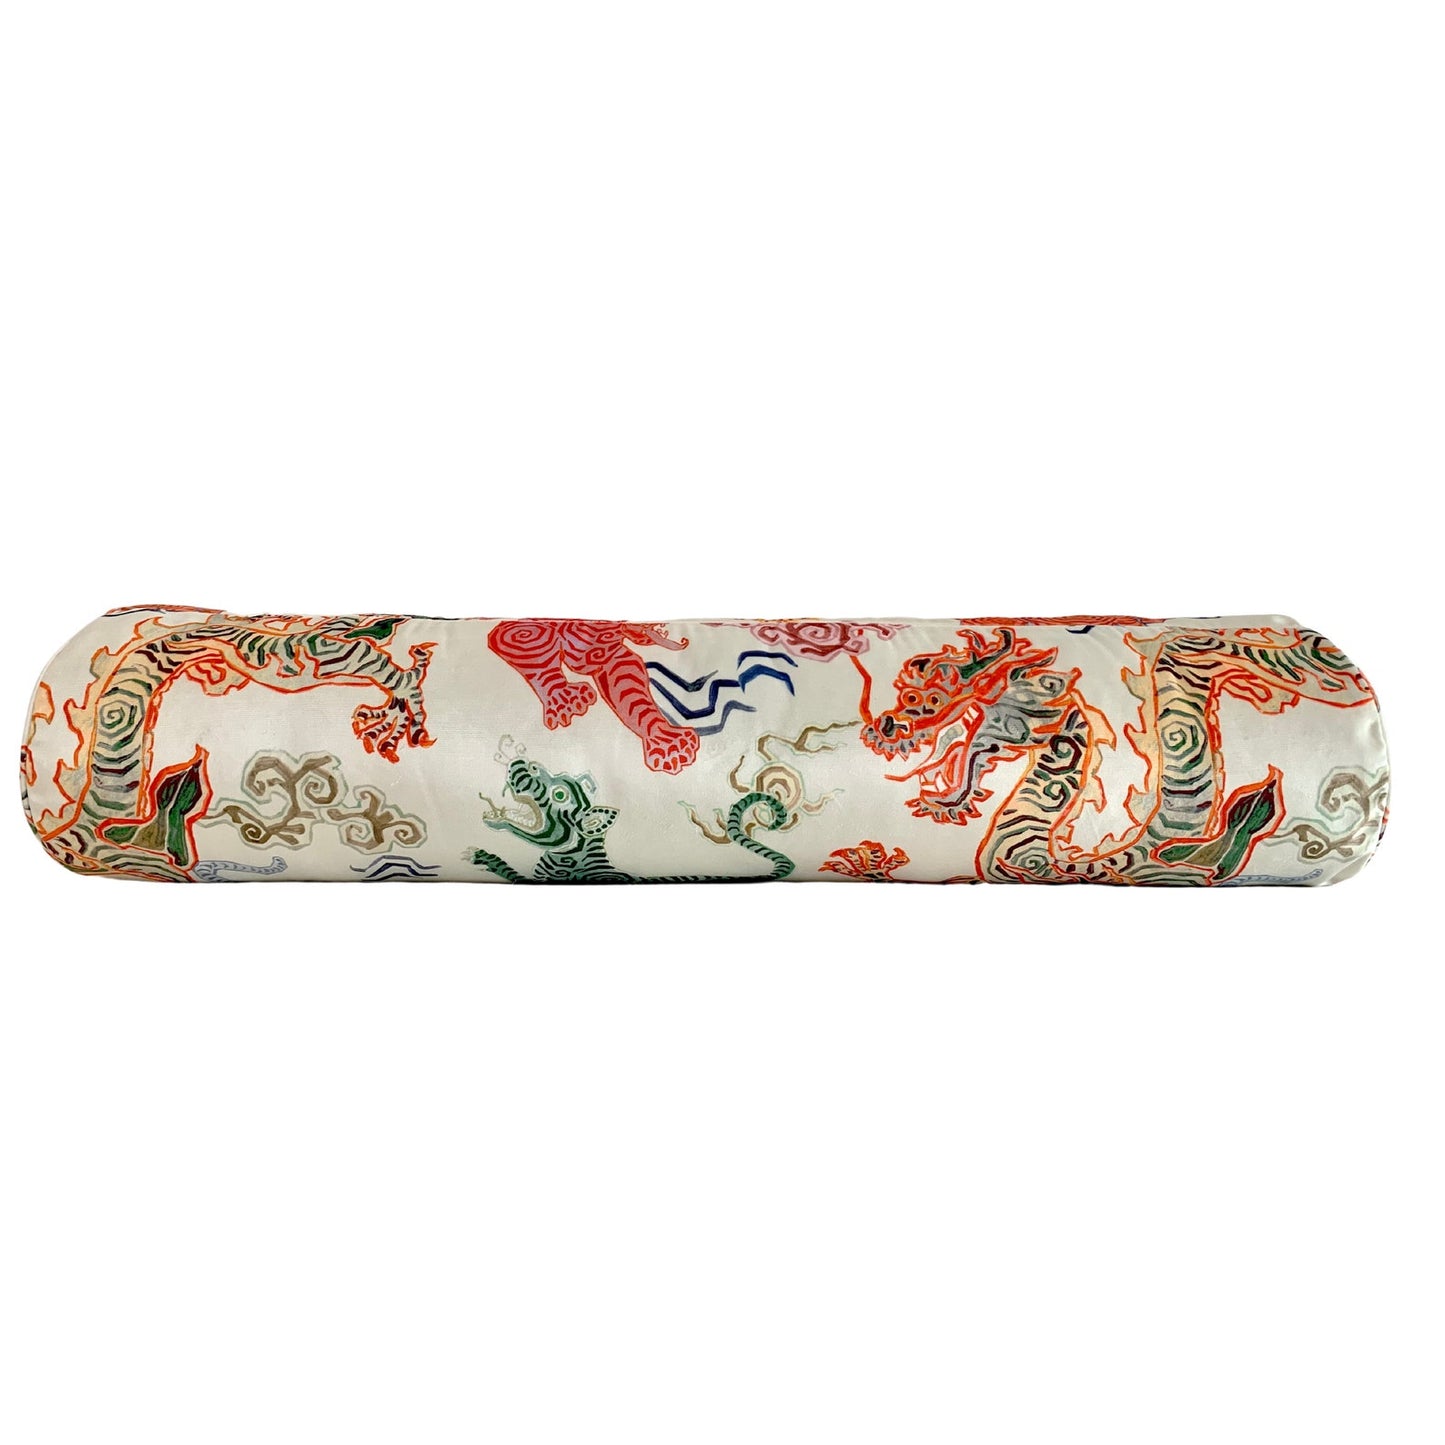 Modern Chinoiserie - Tibetan Tiger and Asian Dragon Velvet Pillow Cover - Available in Bolster, Lumbar, Throw, Euro Sham Sizes